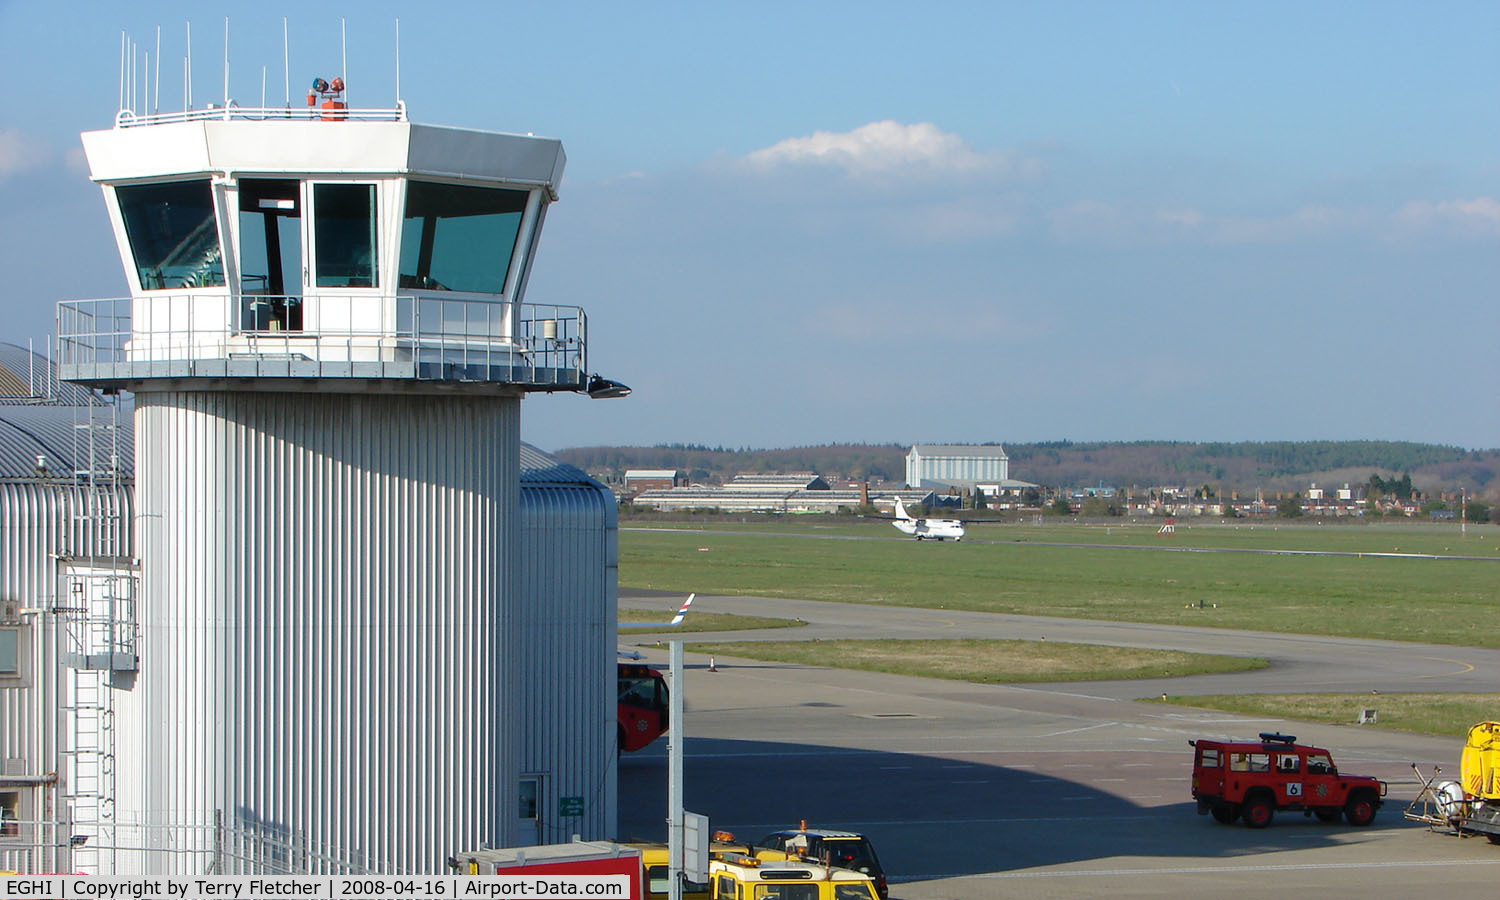 Southampton Airport, Southampton, England United Kingdom (EGHI) - Controllers at Southampton ATC watch as a Brit Air ATR flight departs